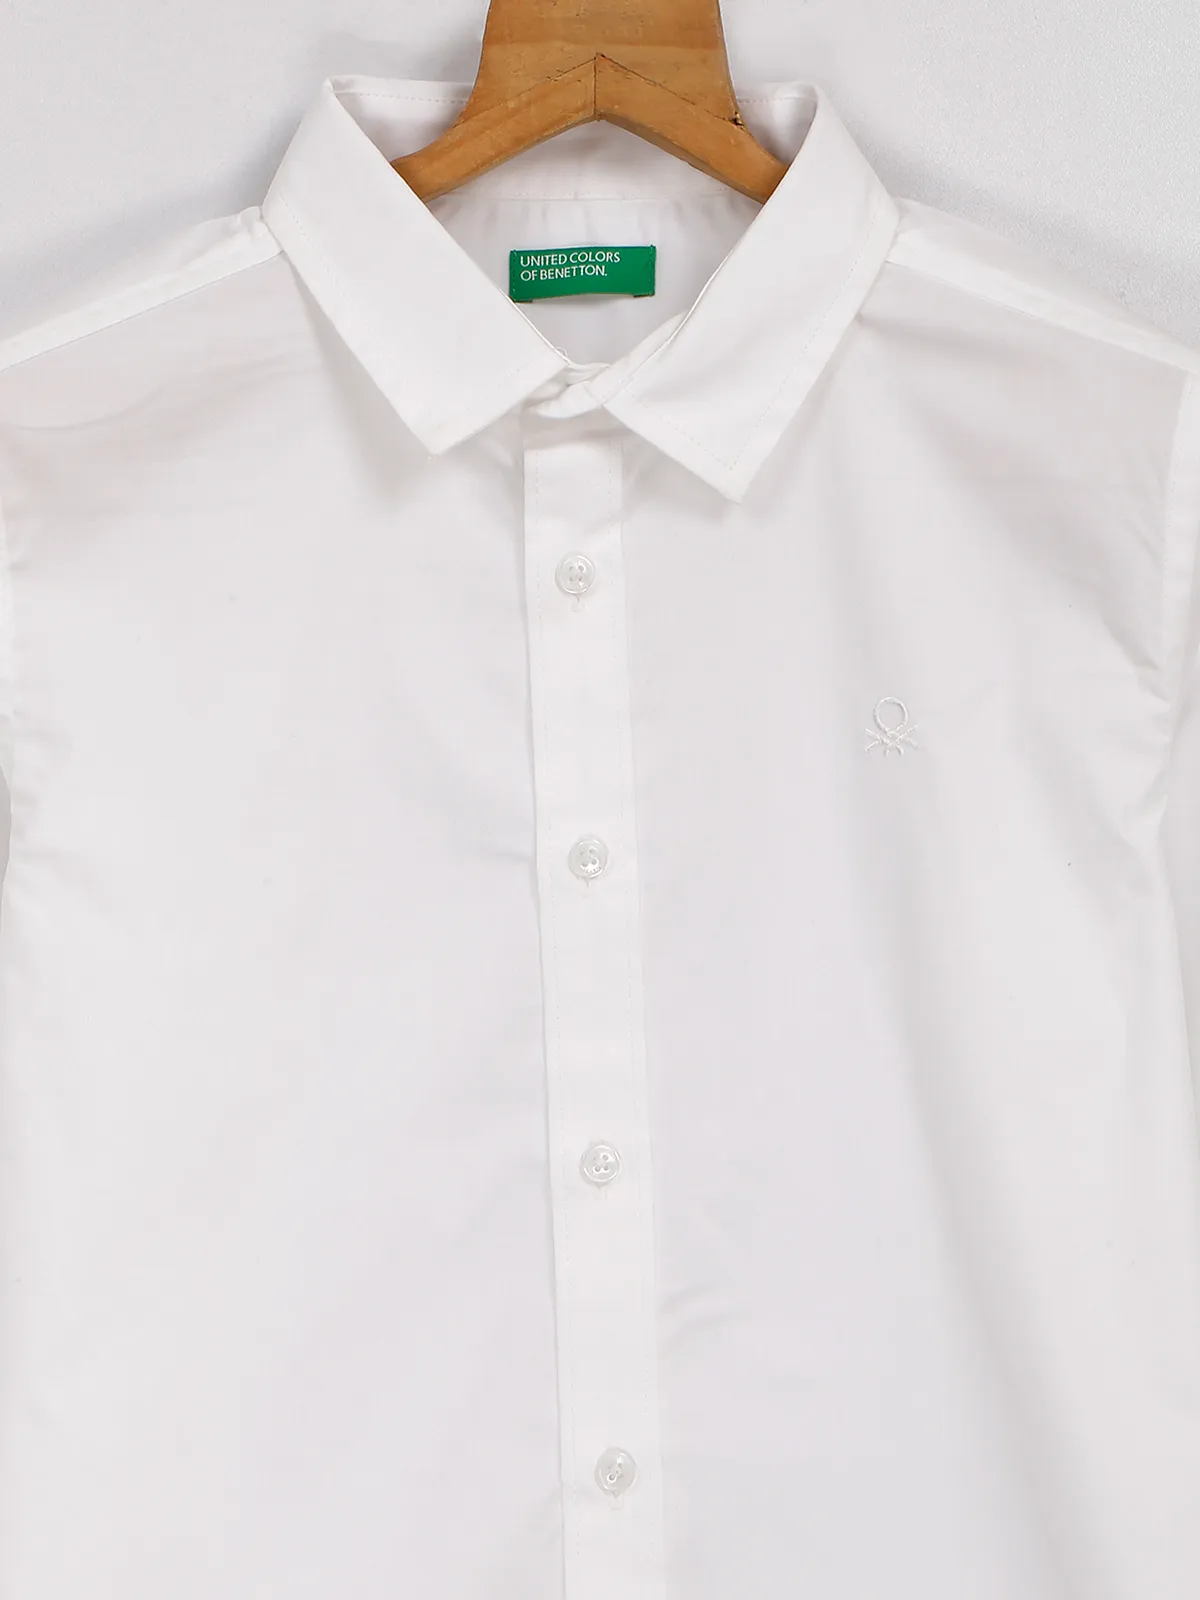 UCB cotton white plain casual shirt